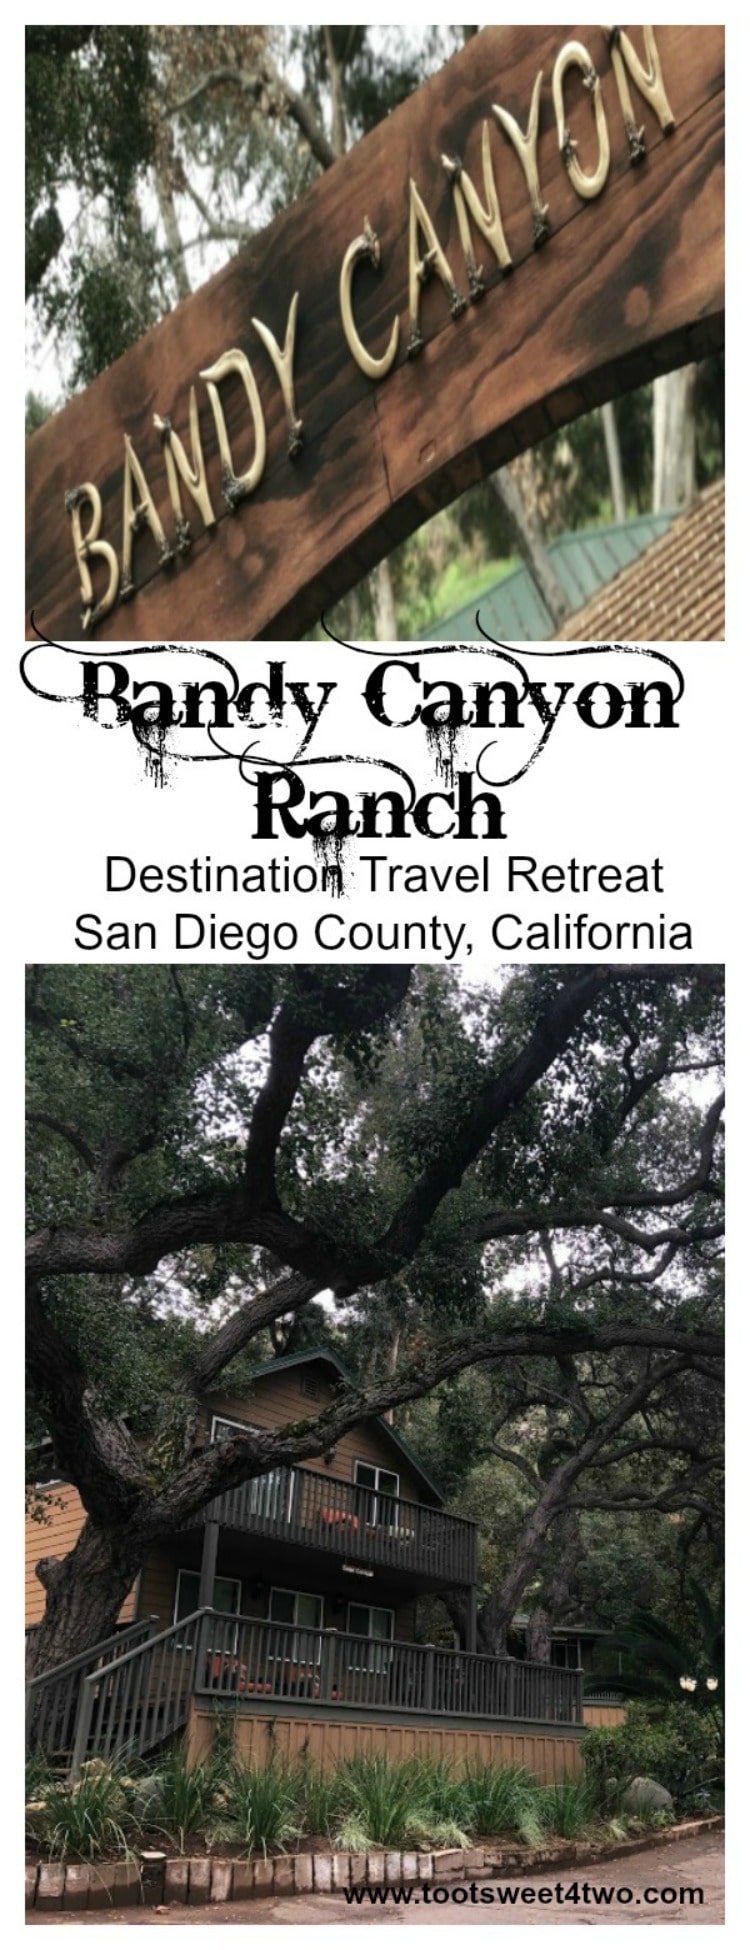 Bandy Canyon Ranch collage